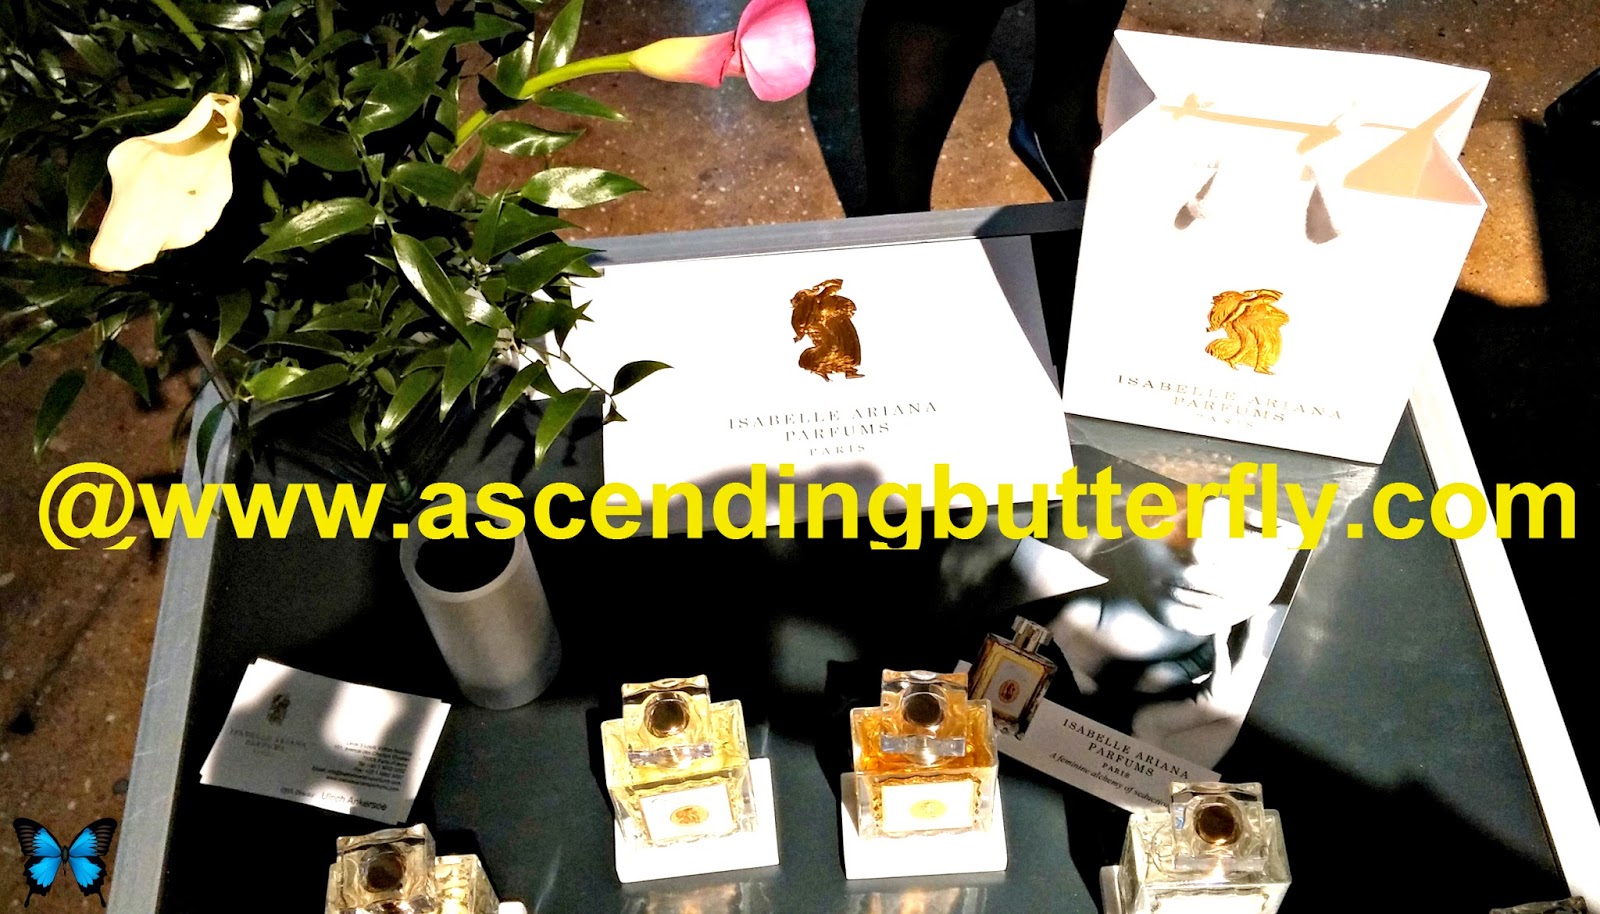 Isabelle Ariana Parfums Paris display at Elements Showcase